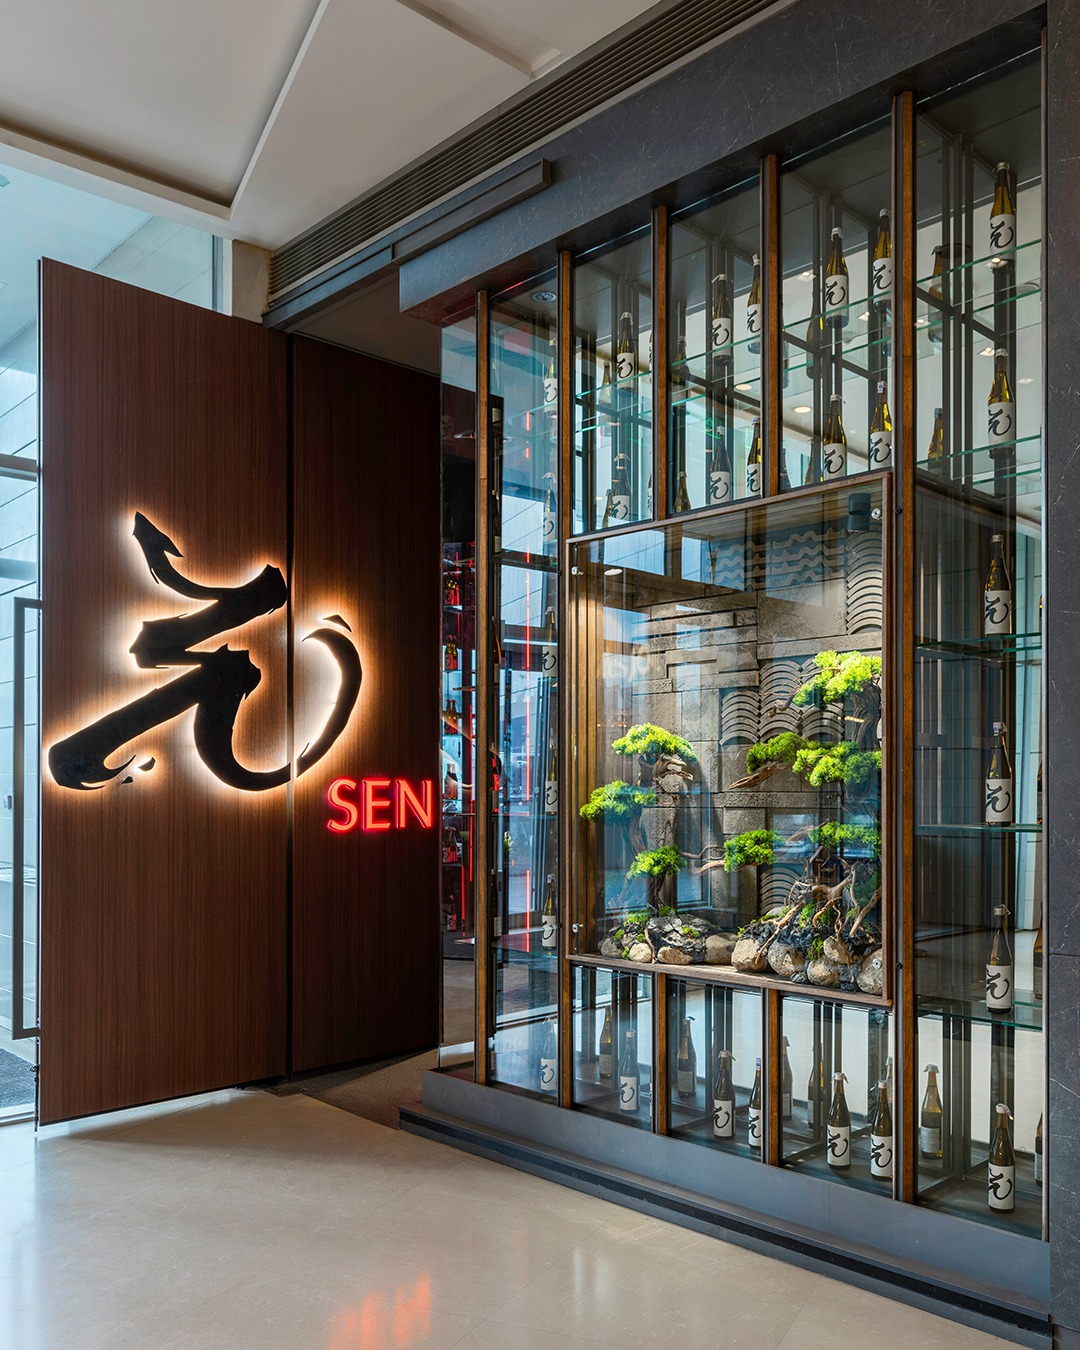 Sen Izakaya is a new modern Japanese Restaurant in Ulaanbaatar located in the Shangri-La Mall